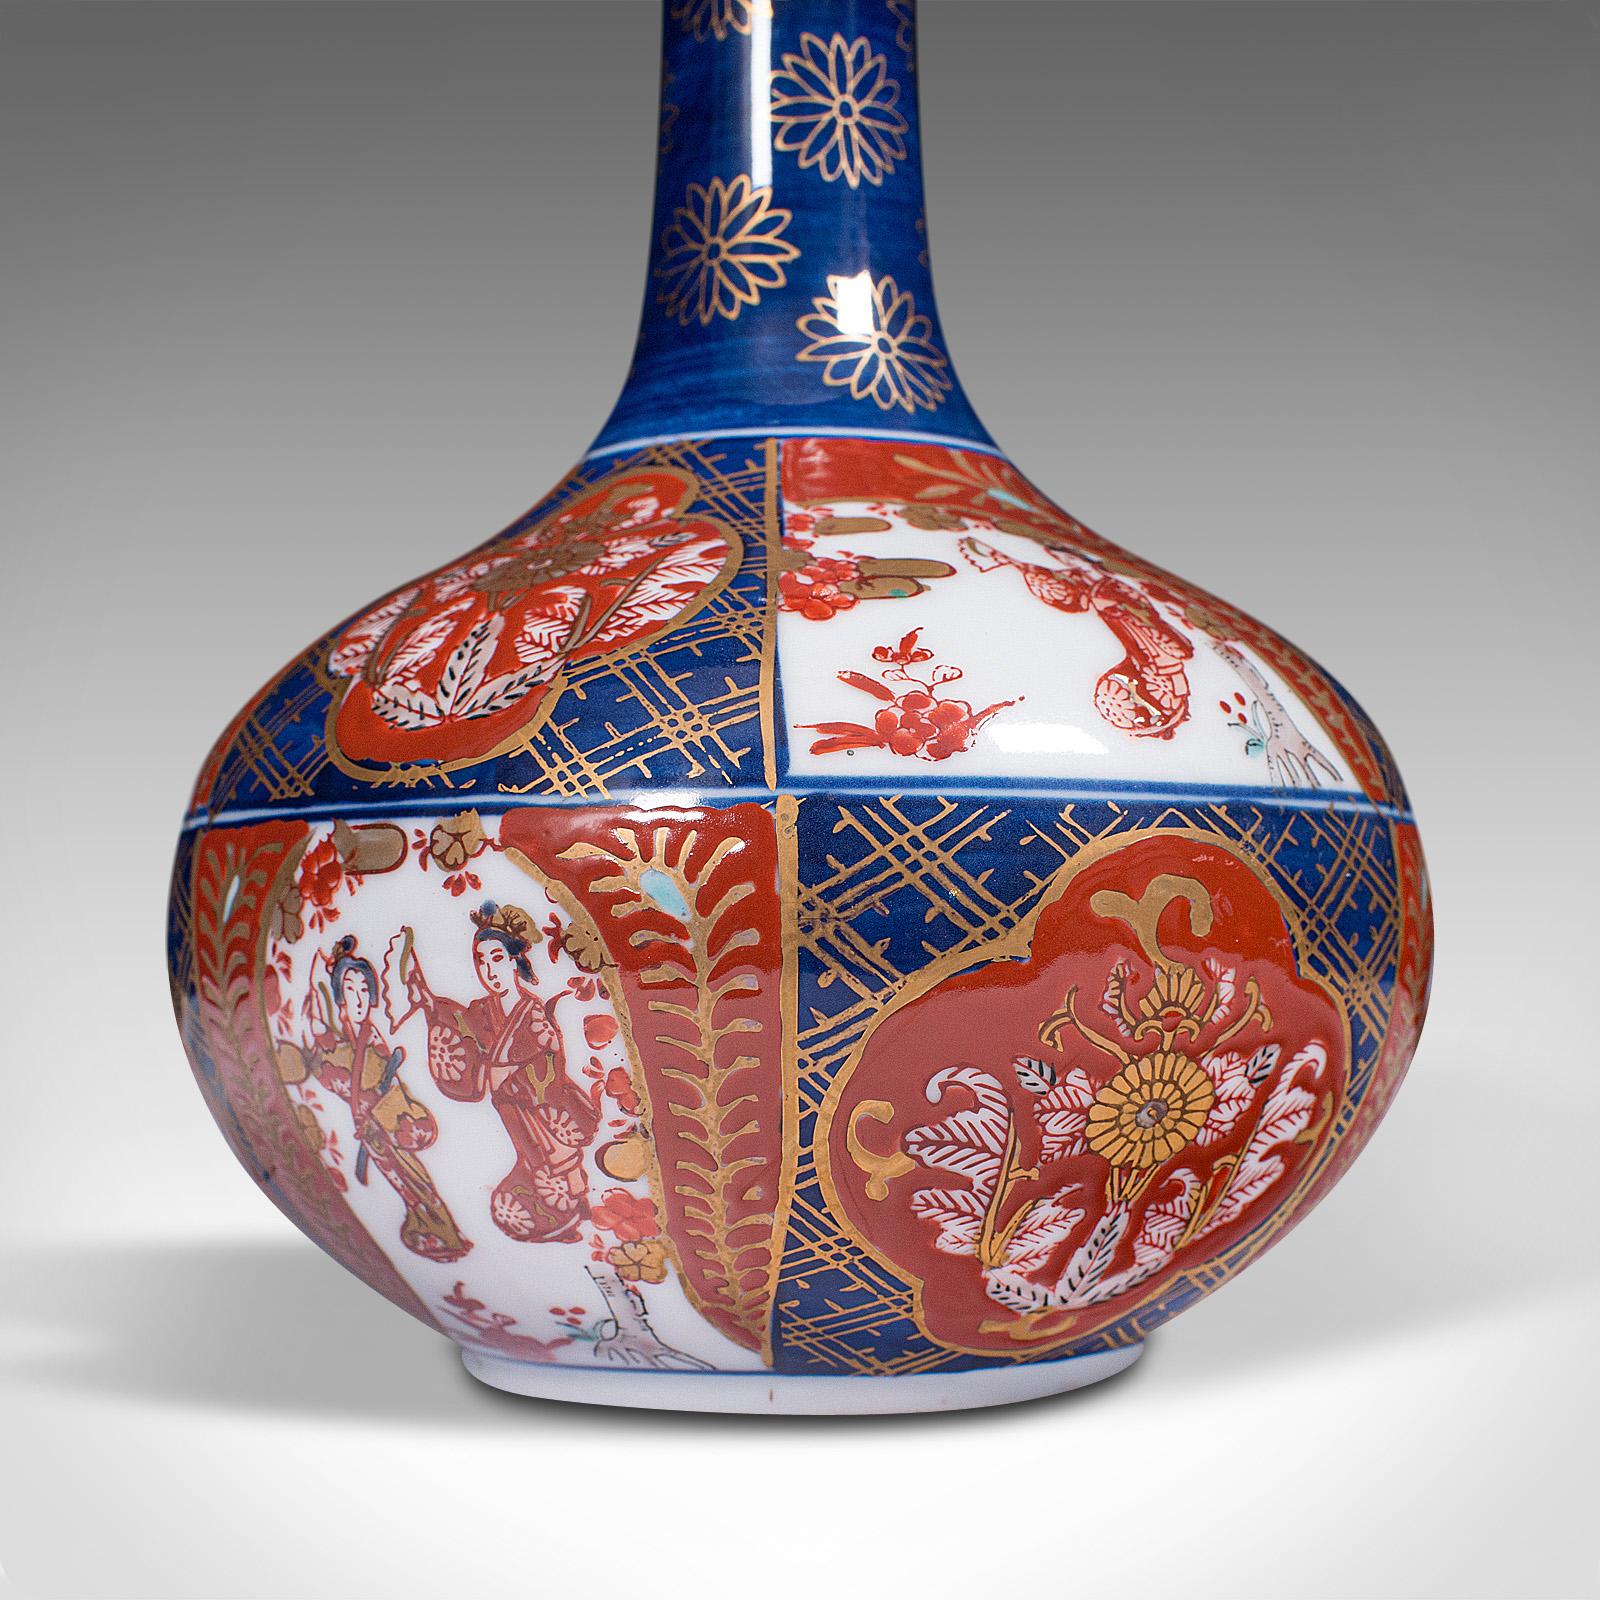 Vintage Imari Revival Flower Vase, Chinese, Ceramic, Decorative, Display Urn For Sale 4